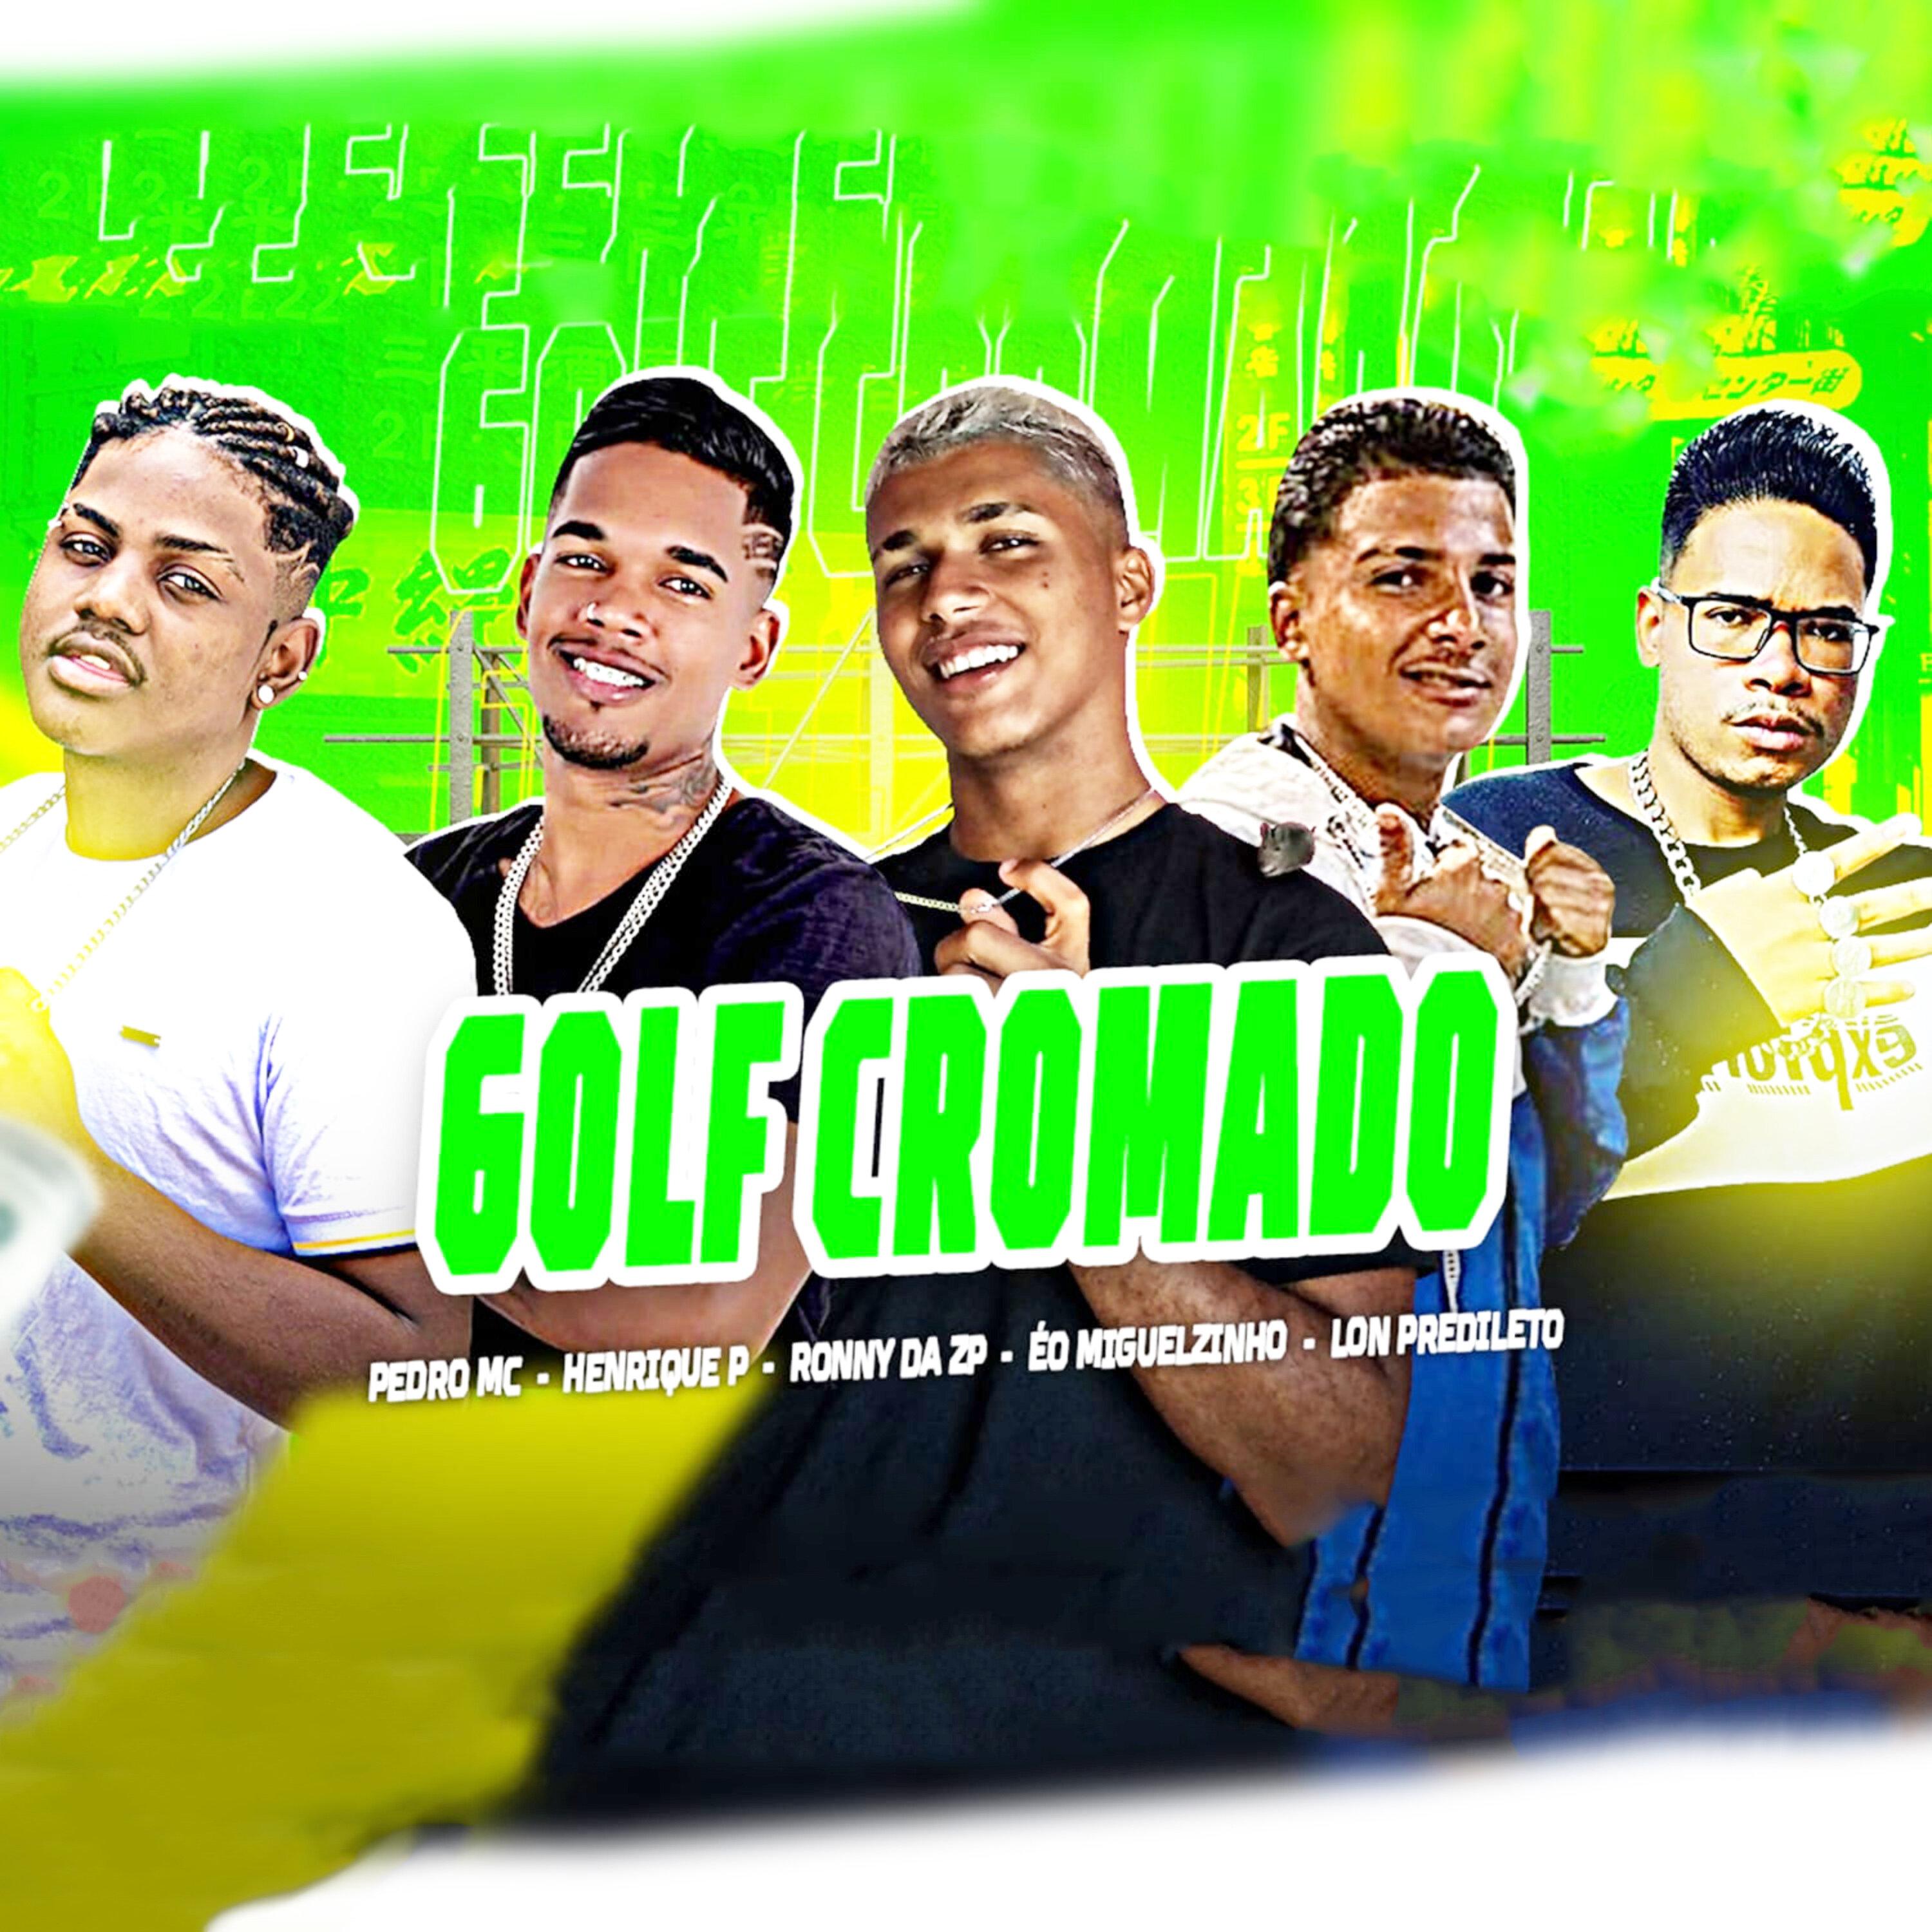 Lon Predileto - Golf Cromado (feat. Èo Miguelzinho, Pedro Mc, Henrique P & Ronny Da Zp)